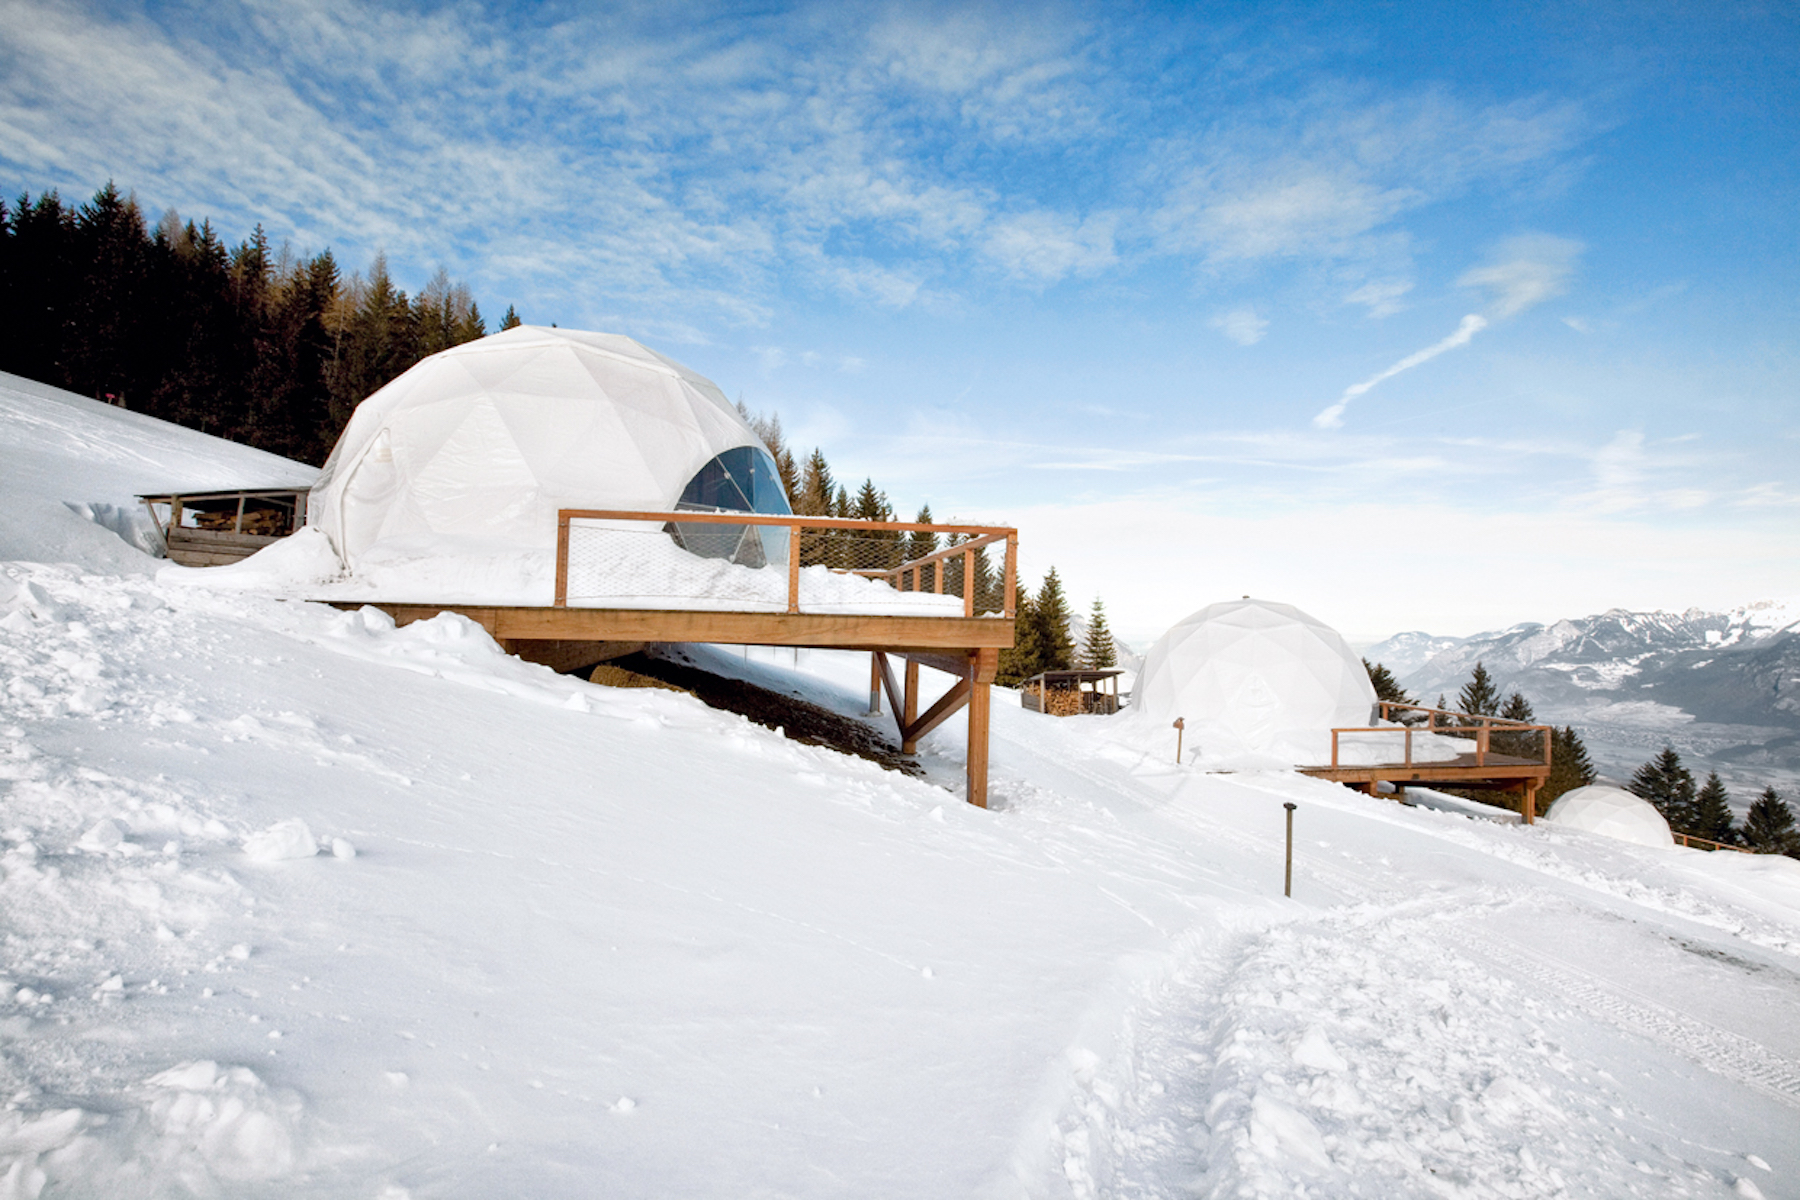 Whitepod Eco Luxury Hotel in Les Giettes, Matterhorn Region offers novel accommodations